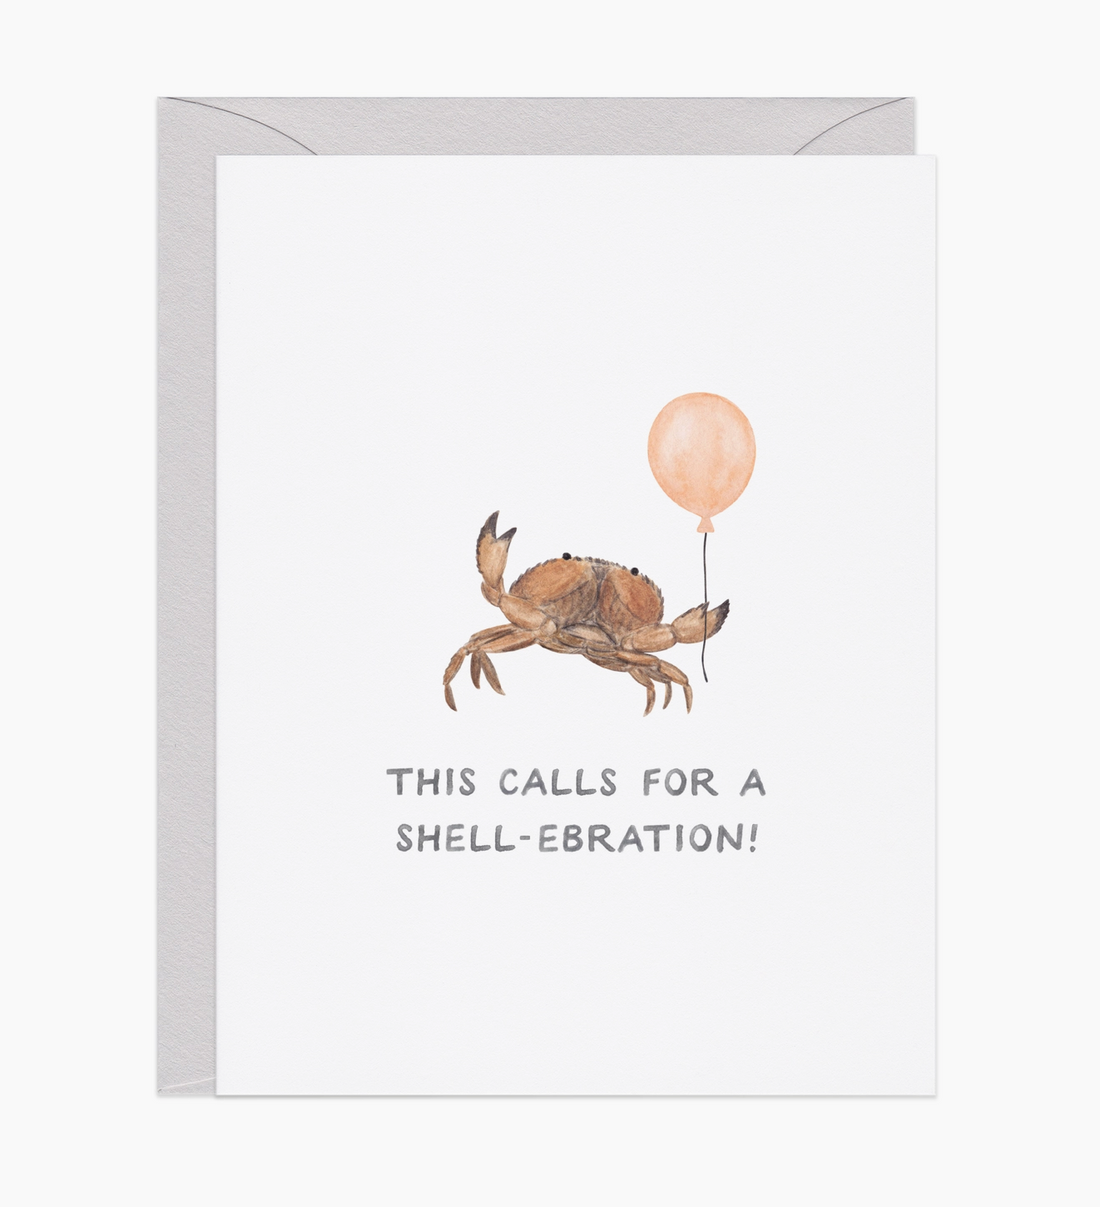 Shell-ebration Crab Card